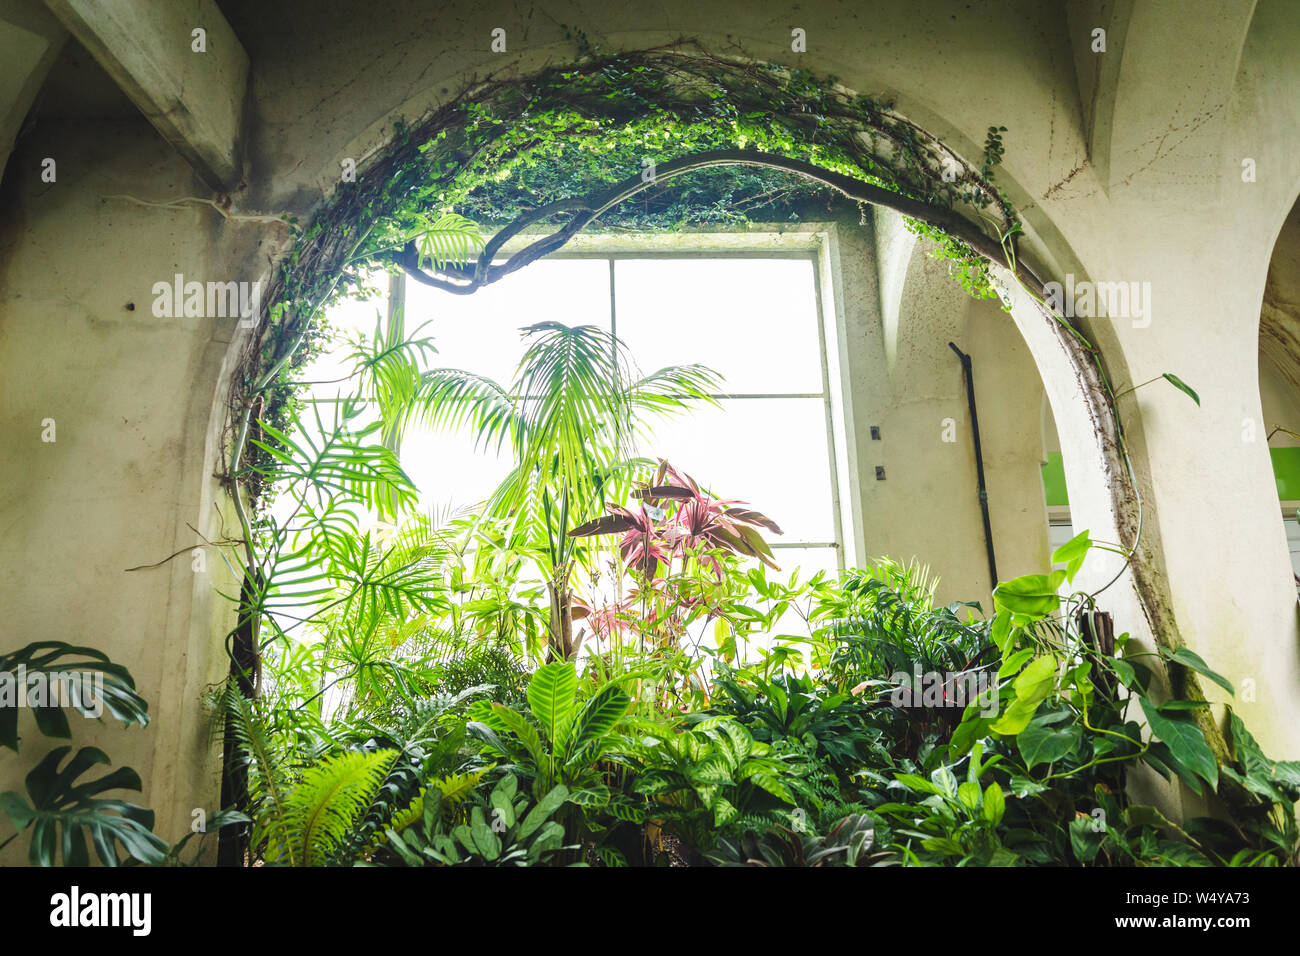 Tropical greenhouse glasshouse sunny interior full of lush green plants. Modern interior architecture. Natural design. Indoor decorative plants. Stock Photo